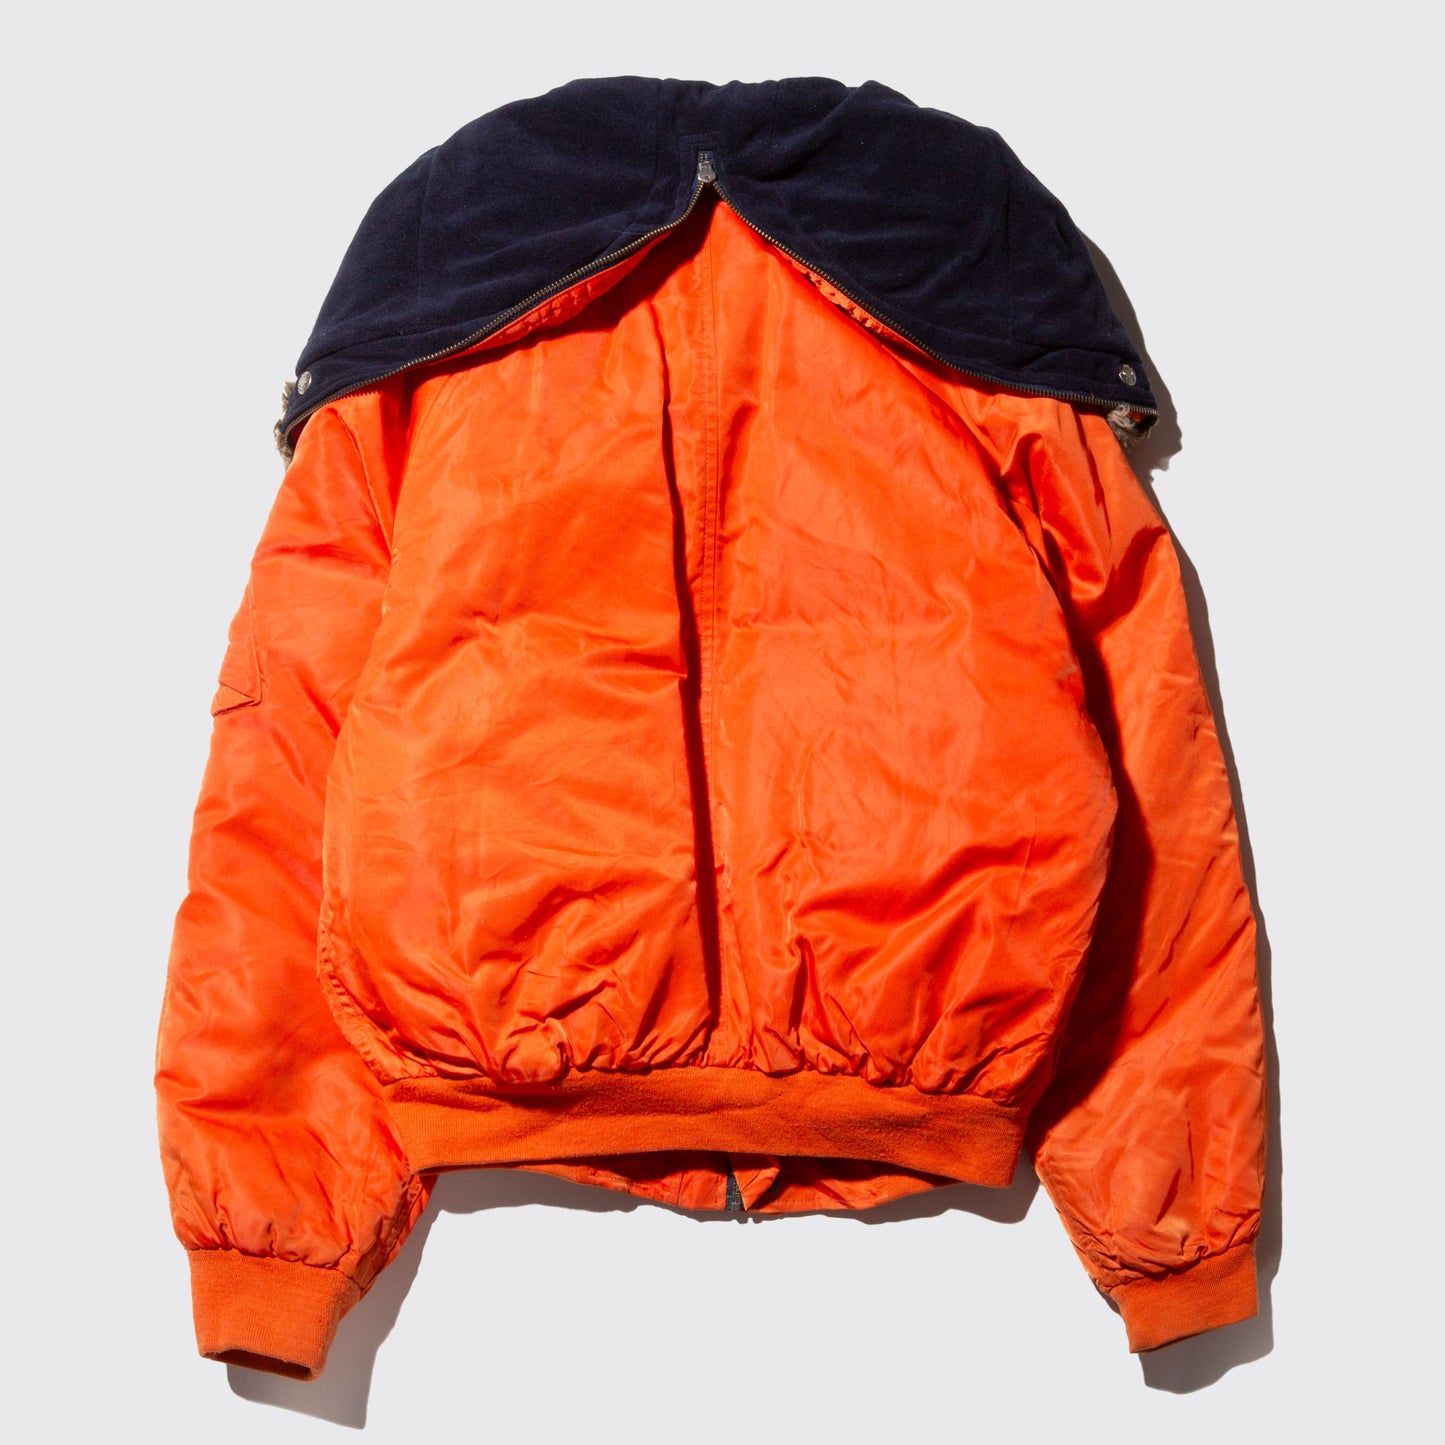 vintage 90's polo sport ralph lauren rescue orange n-2b jacket